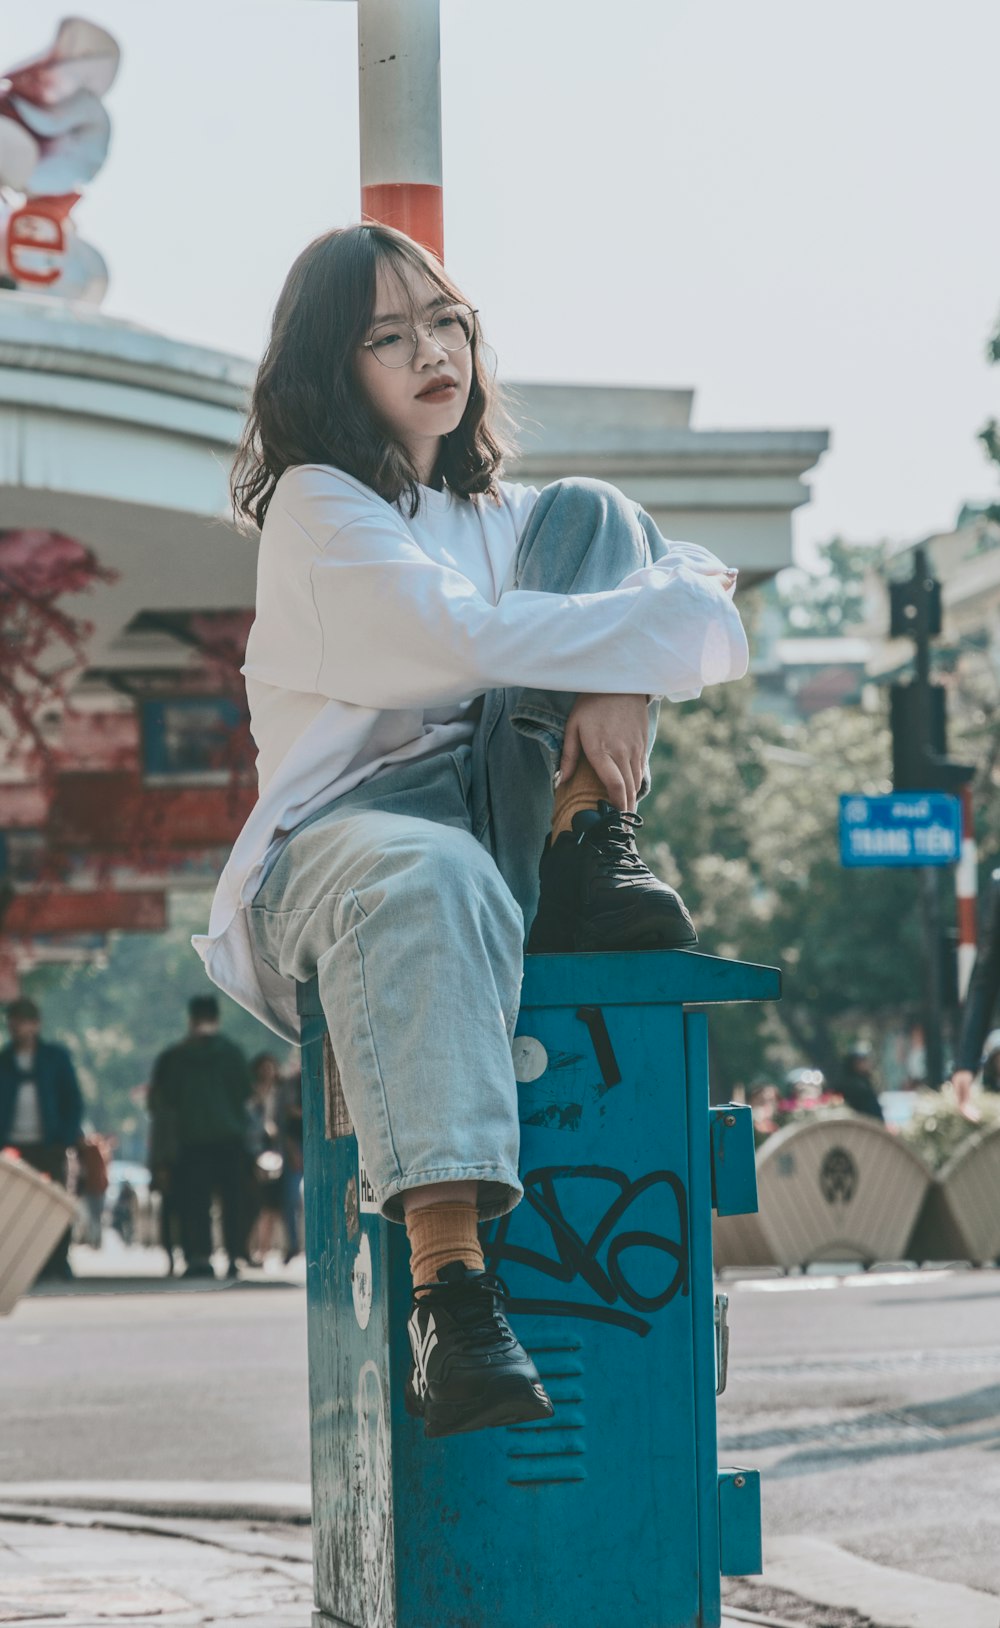 woman in white long sleeve shirt sitting on blue plastic trash bin during daytime